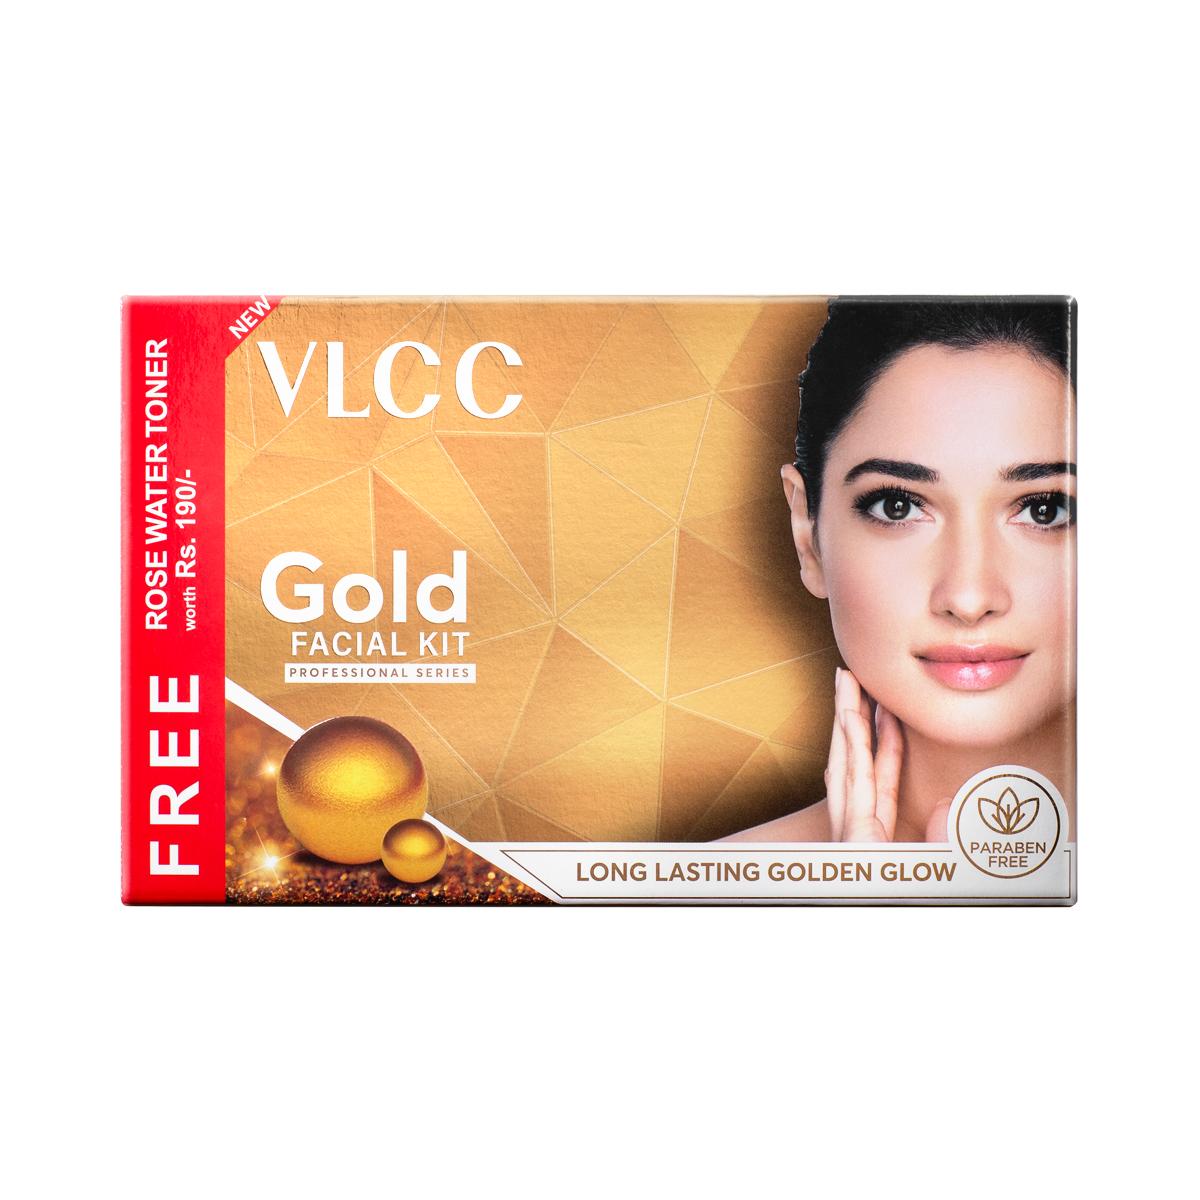 VLCC Gold Facial Kit + FREE Rose Water Toner - Unveil a Golden Glow